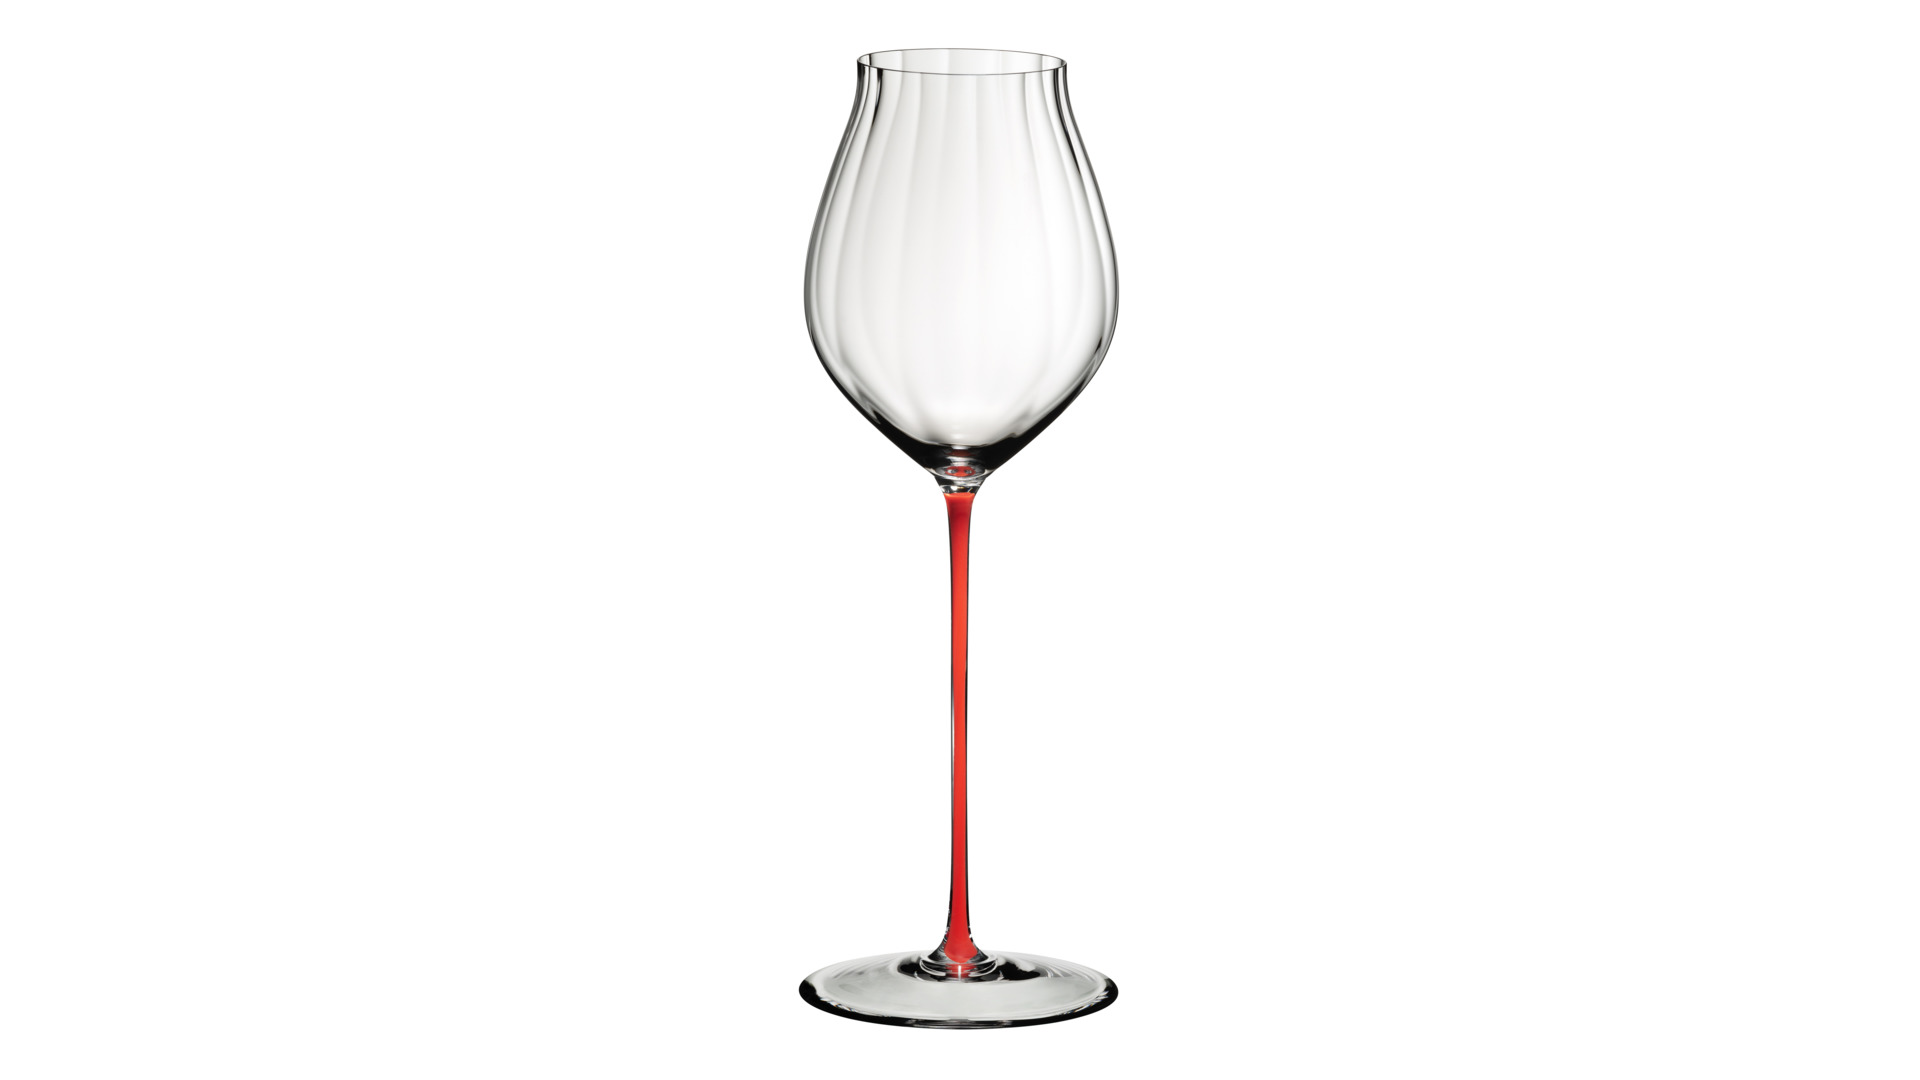 Бокал для красного вина Riedel High Performance Pinor Noir  830мл, красная ножка, ручная работа